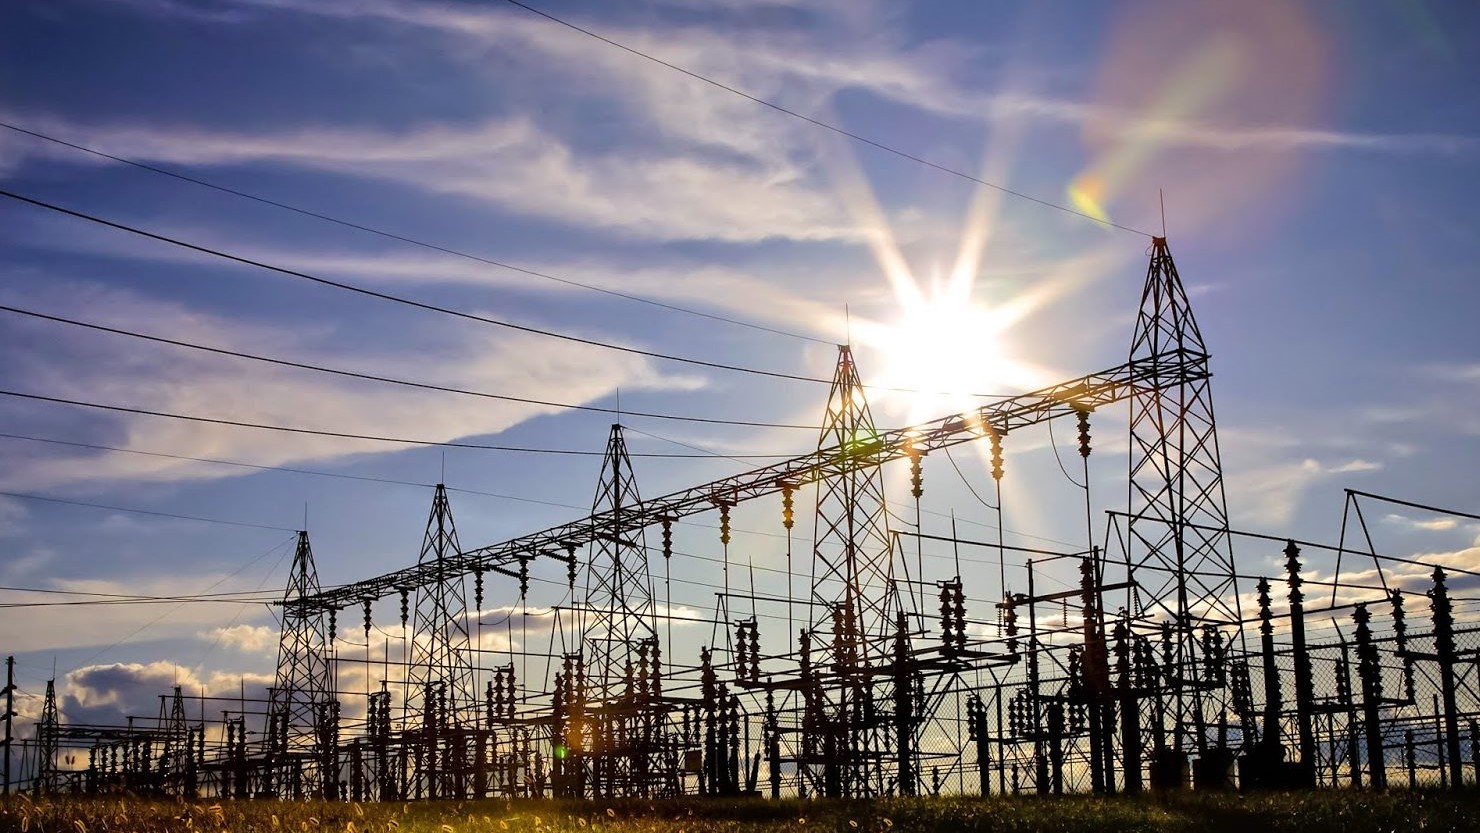 Sudden problem deprives 80% of Diyala regions of electricity 